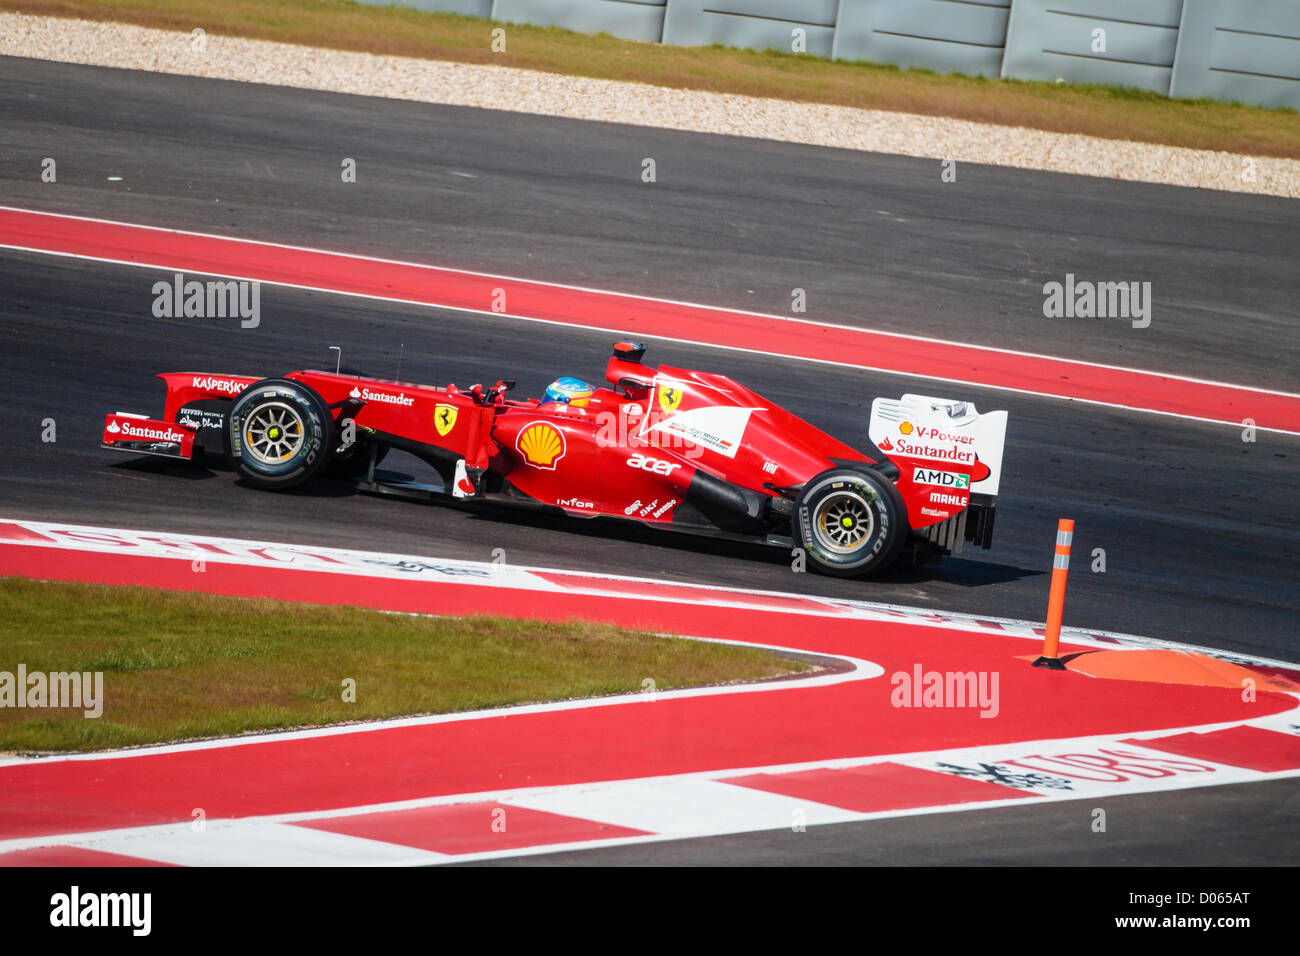 F1 Circuit of the Americas 18. November 2012. Austin, Texas. Formel 1 Runde 19. Stockfoto